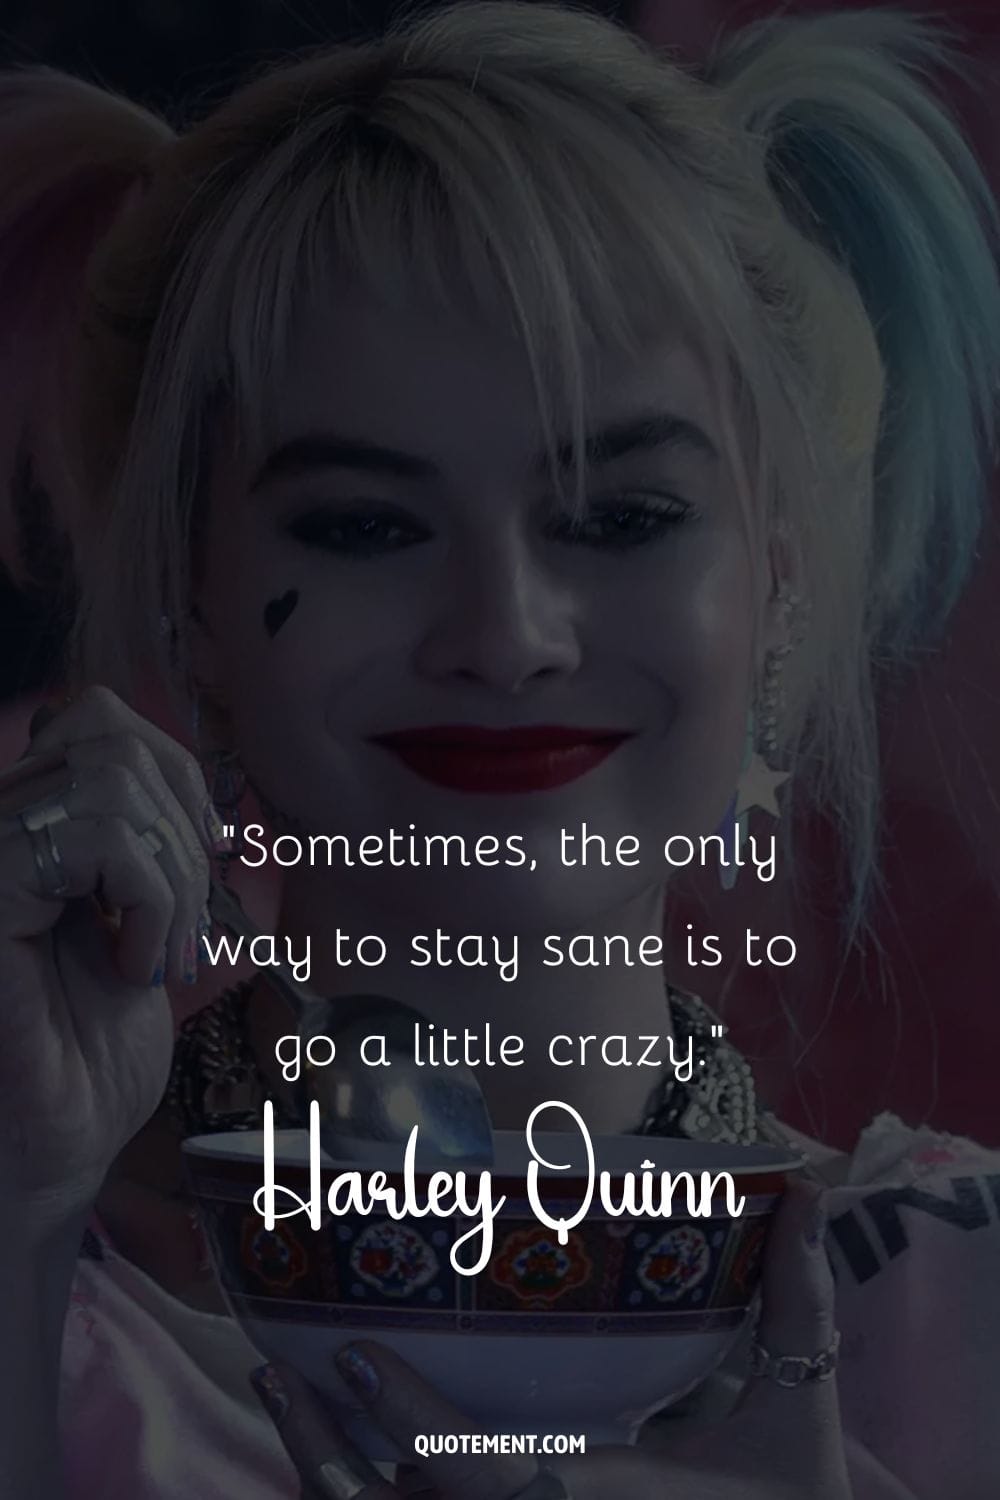 Harley Quinn shares her philosophy.